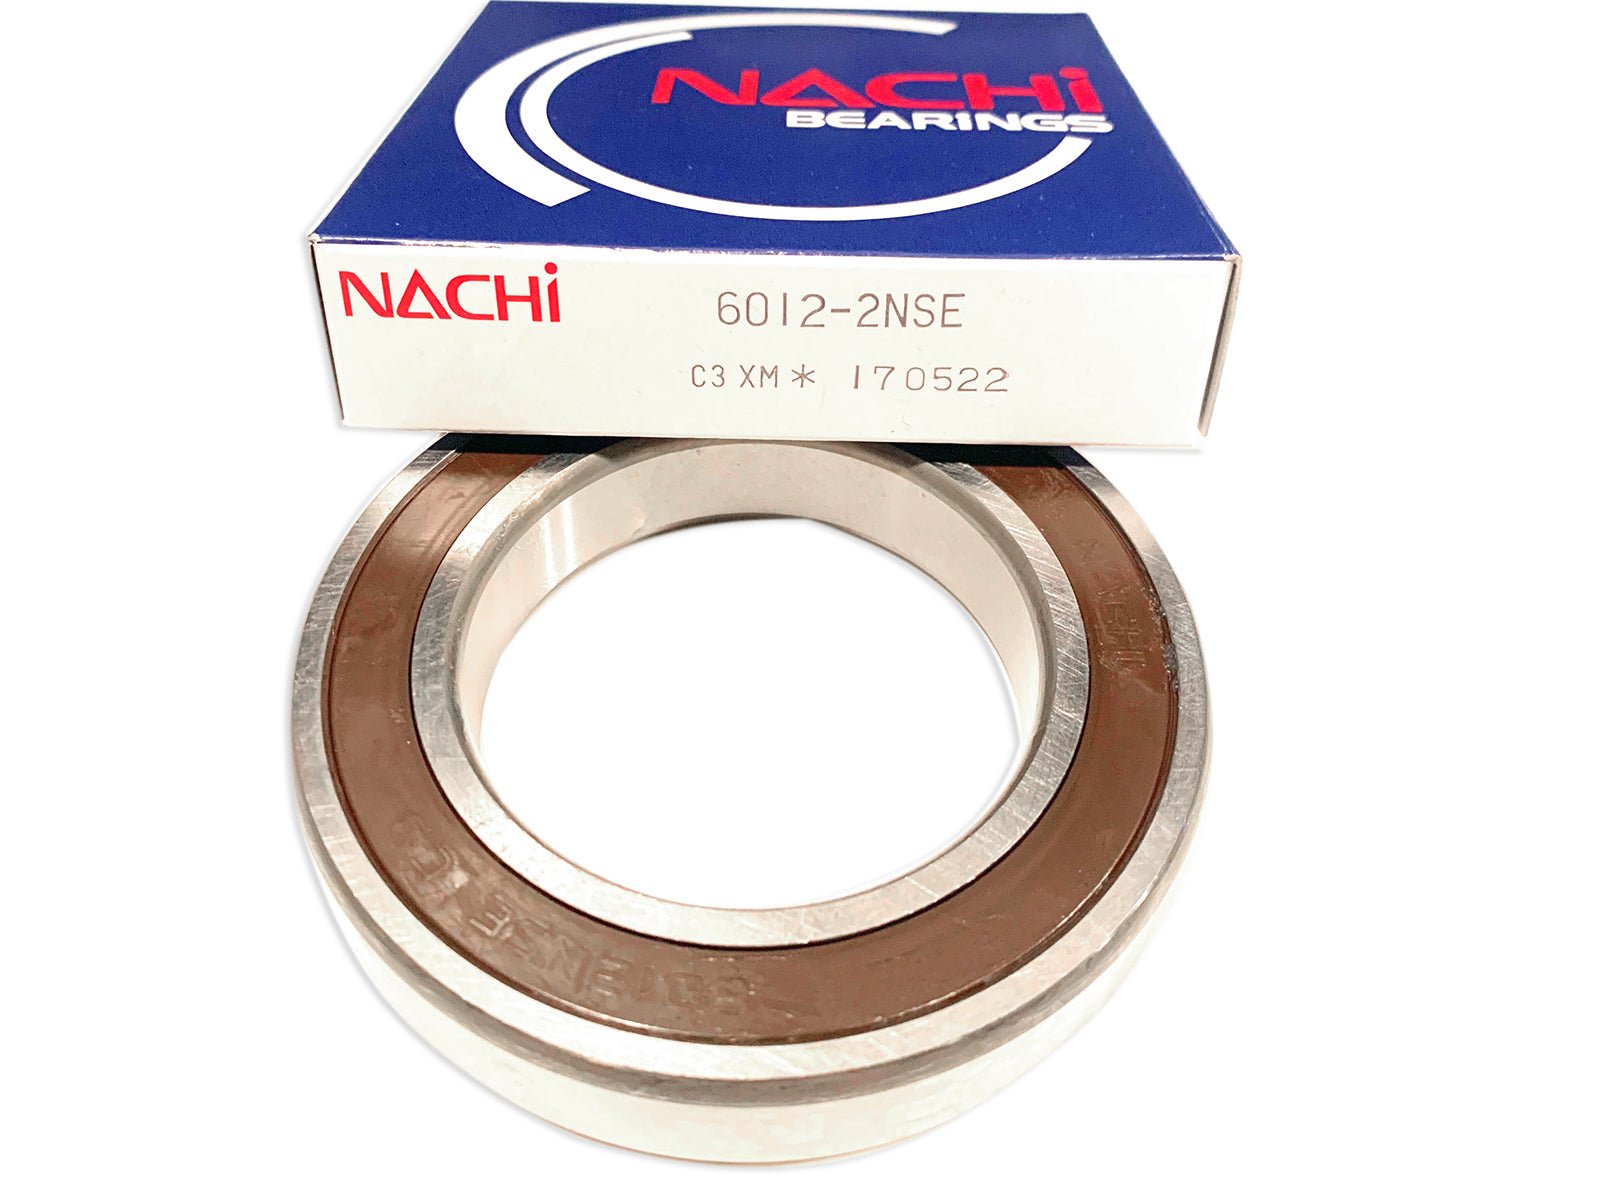 6012-2NSE9 C3 NACHI Ball Bearing - ppdistributors